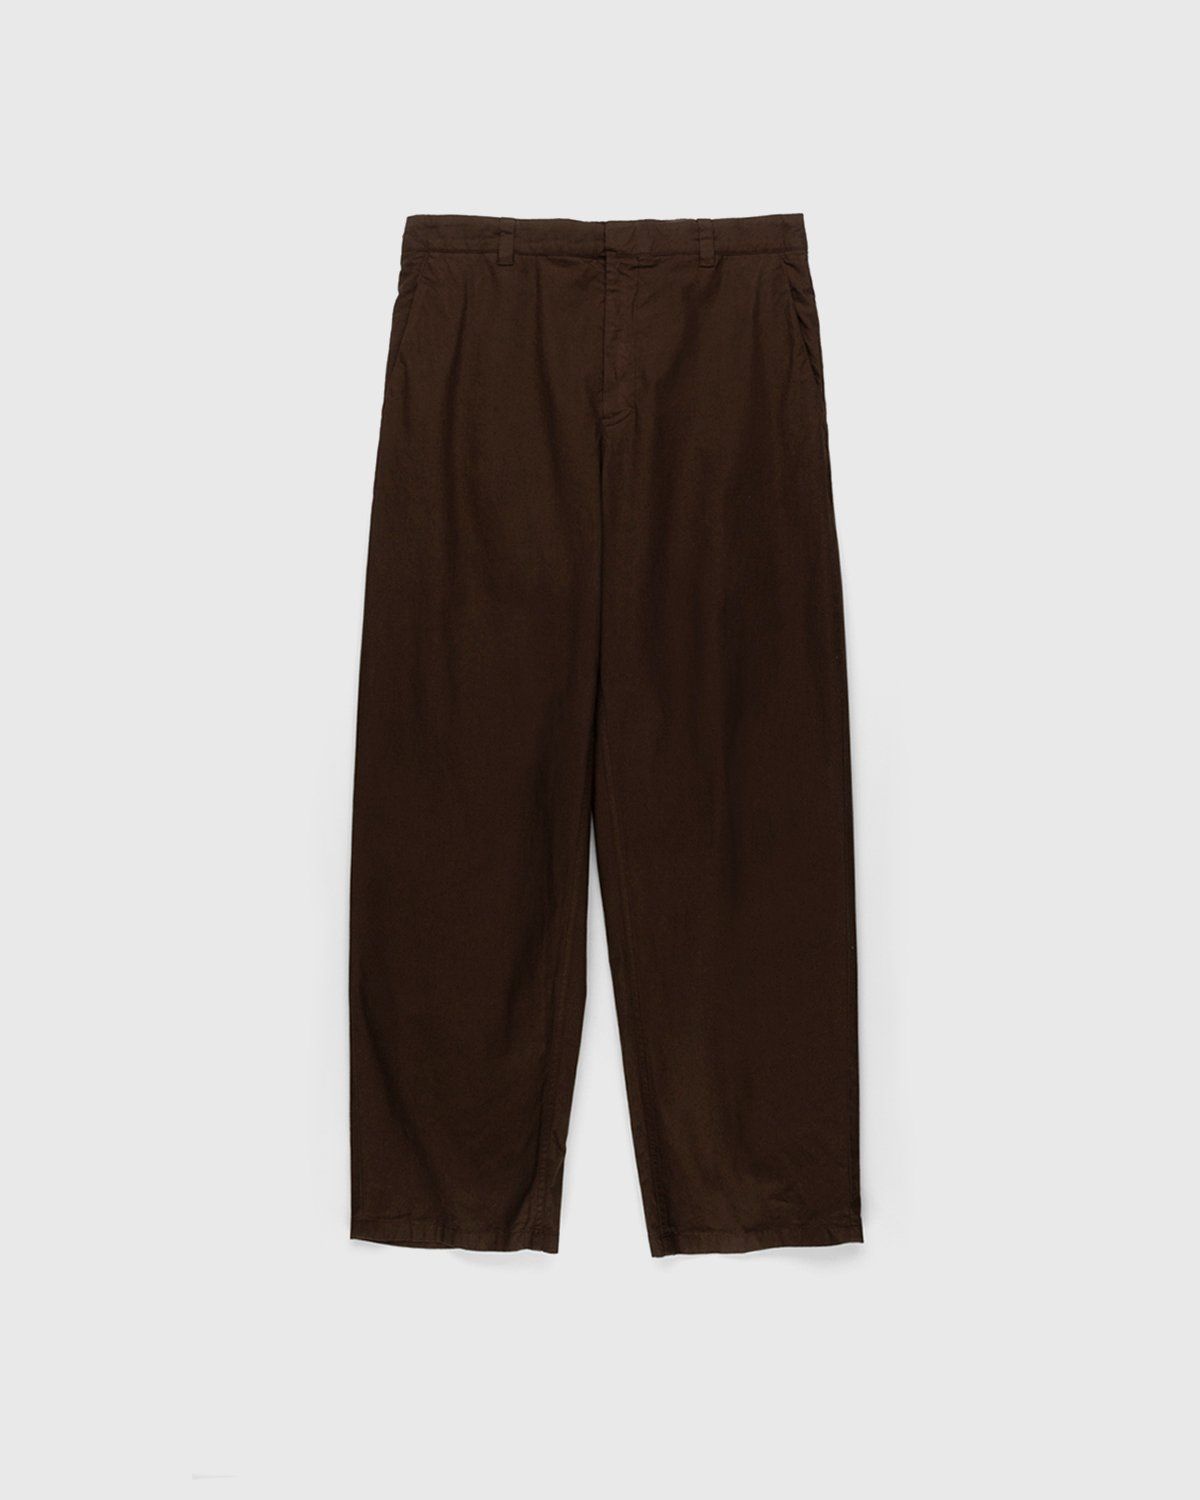 Jil Sander – Cotton Trousers Dark Brown - Pants - Brown - Image 2